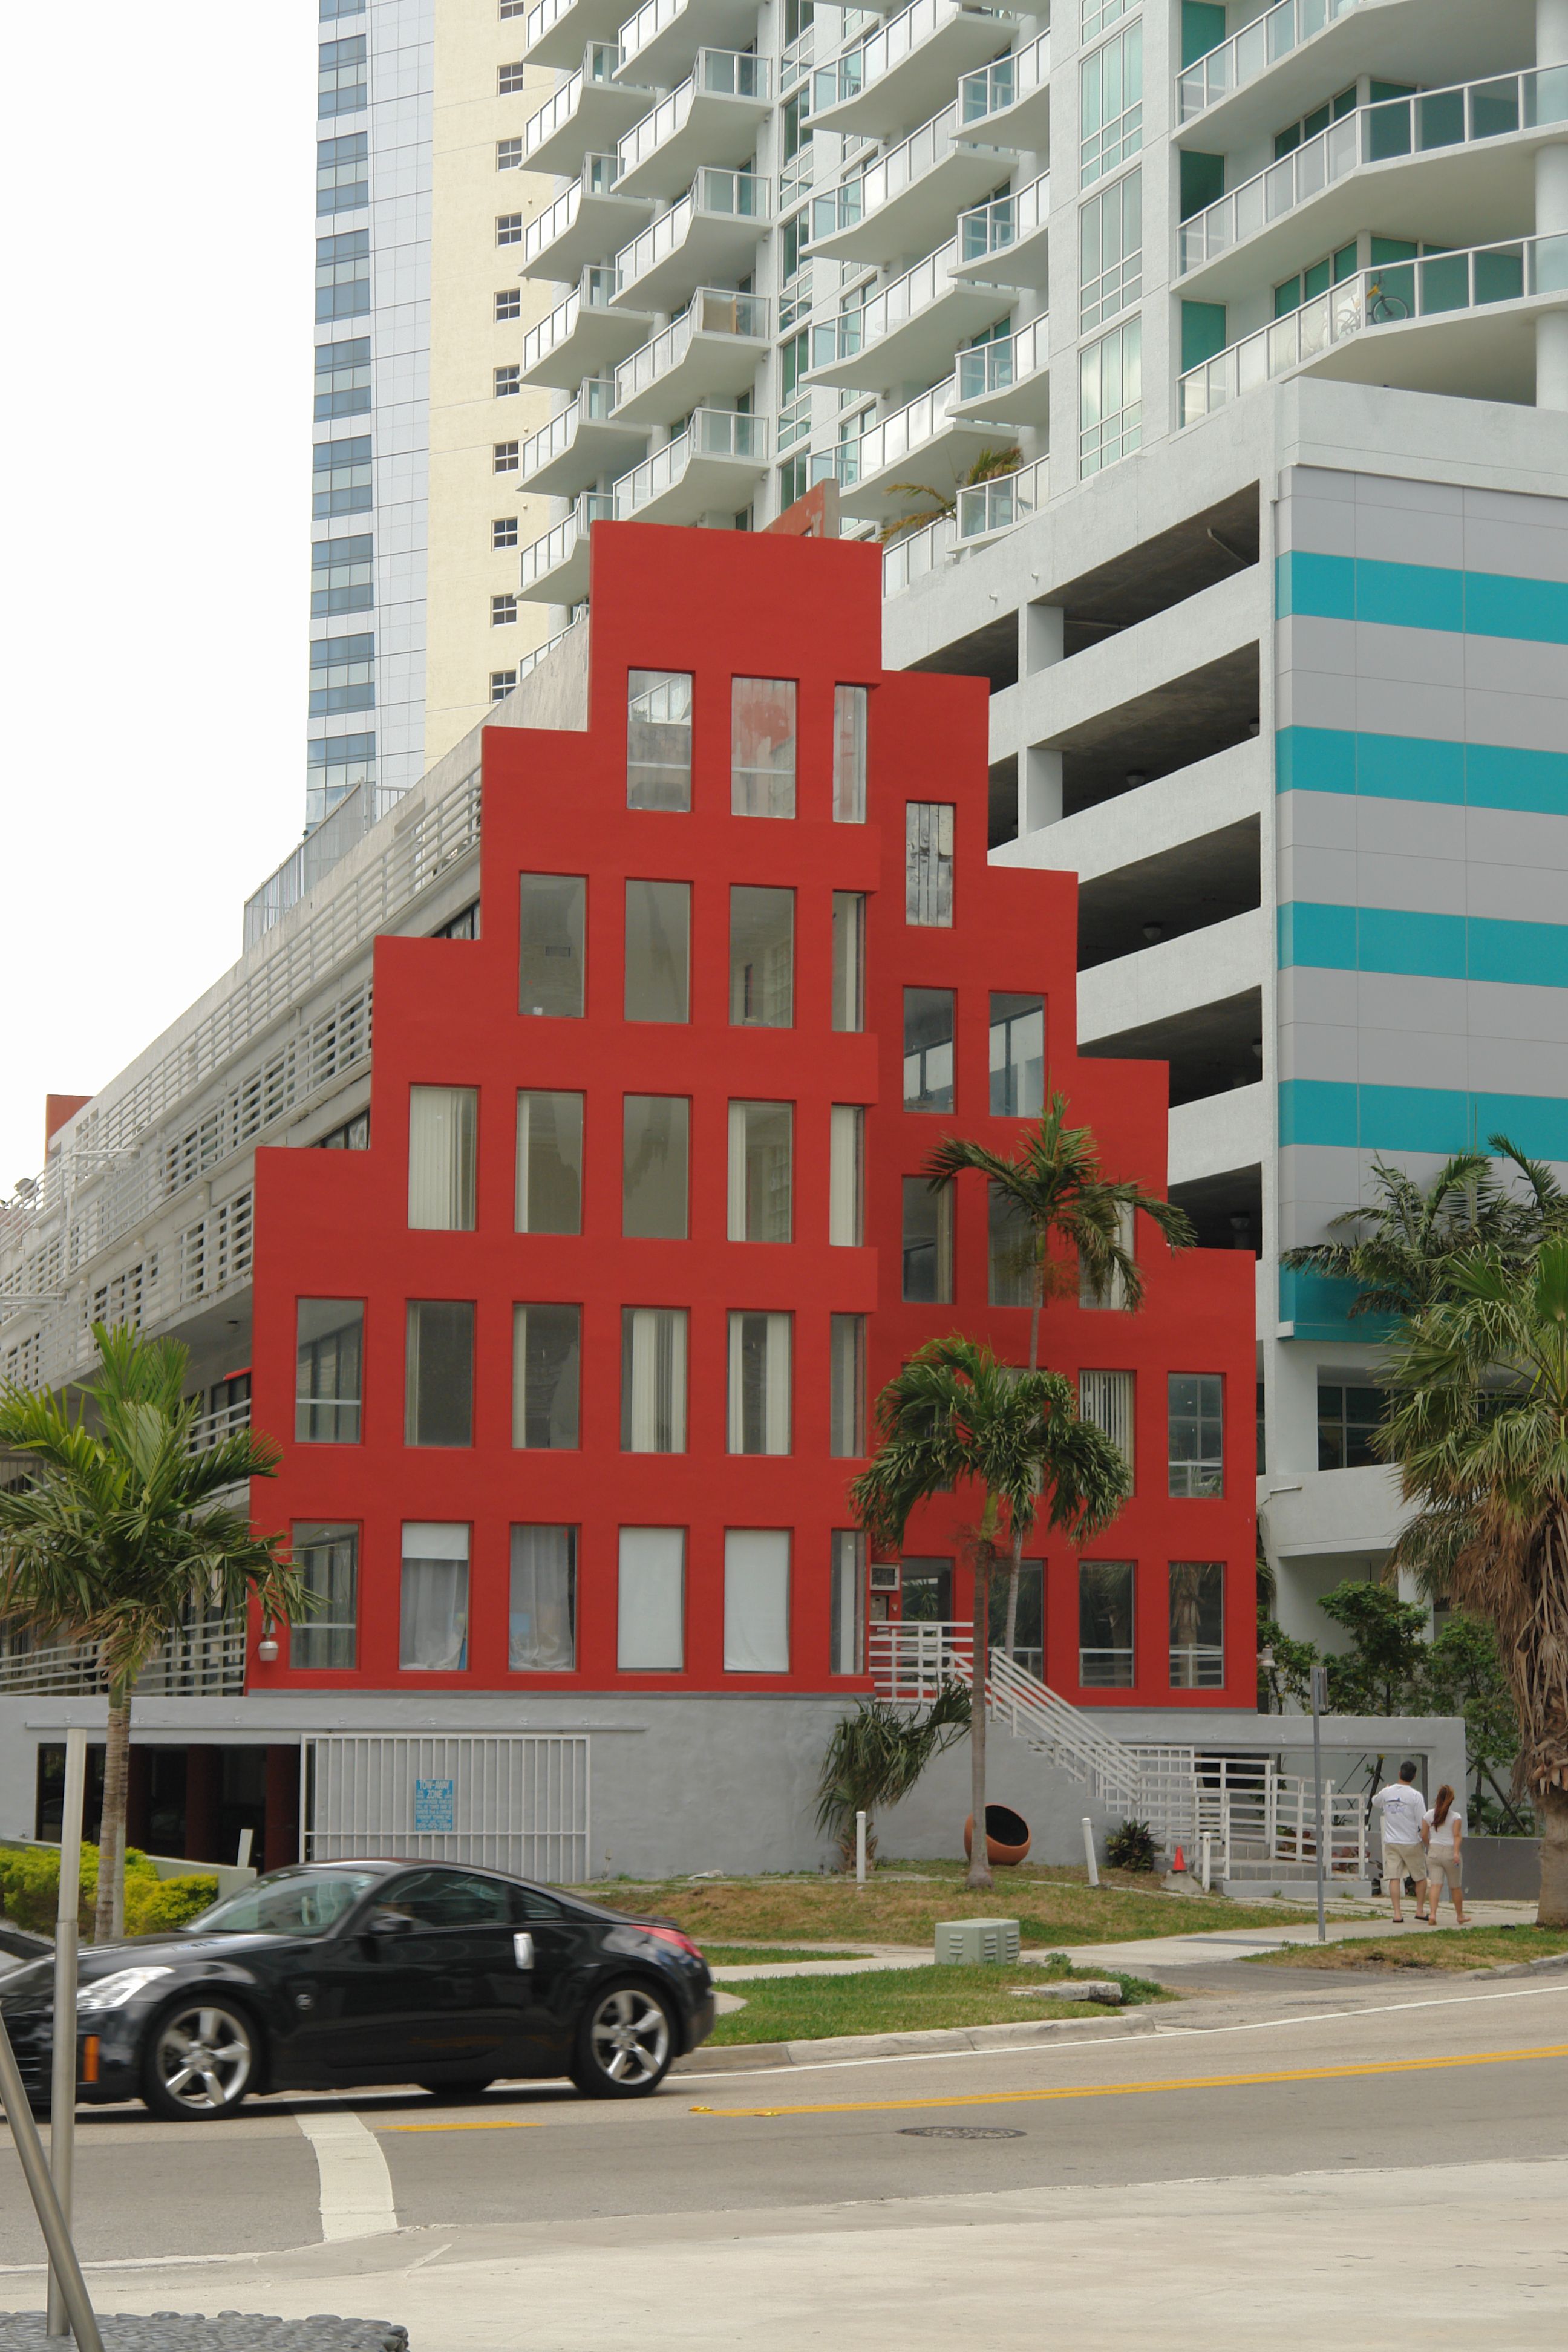 File:Miami-Financedistrict-red-building.jpg - Wikimedia Commons